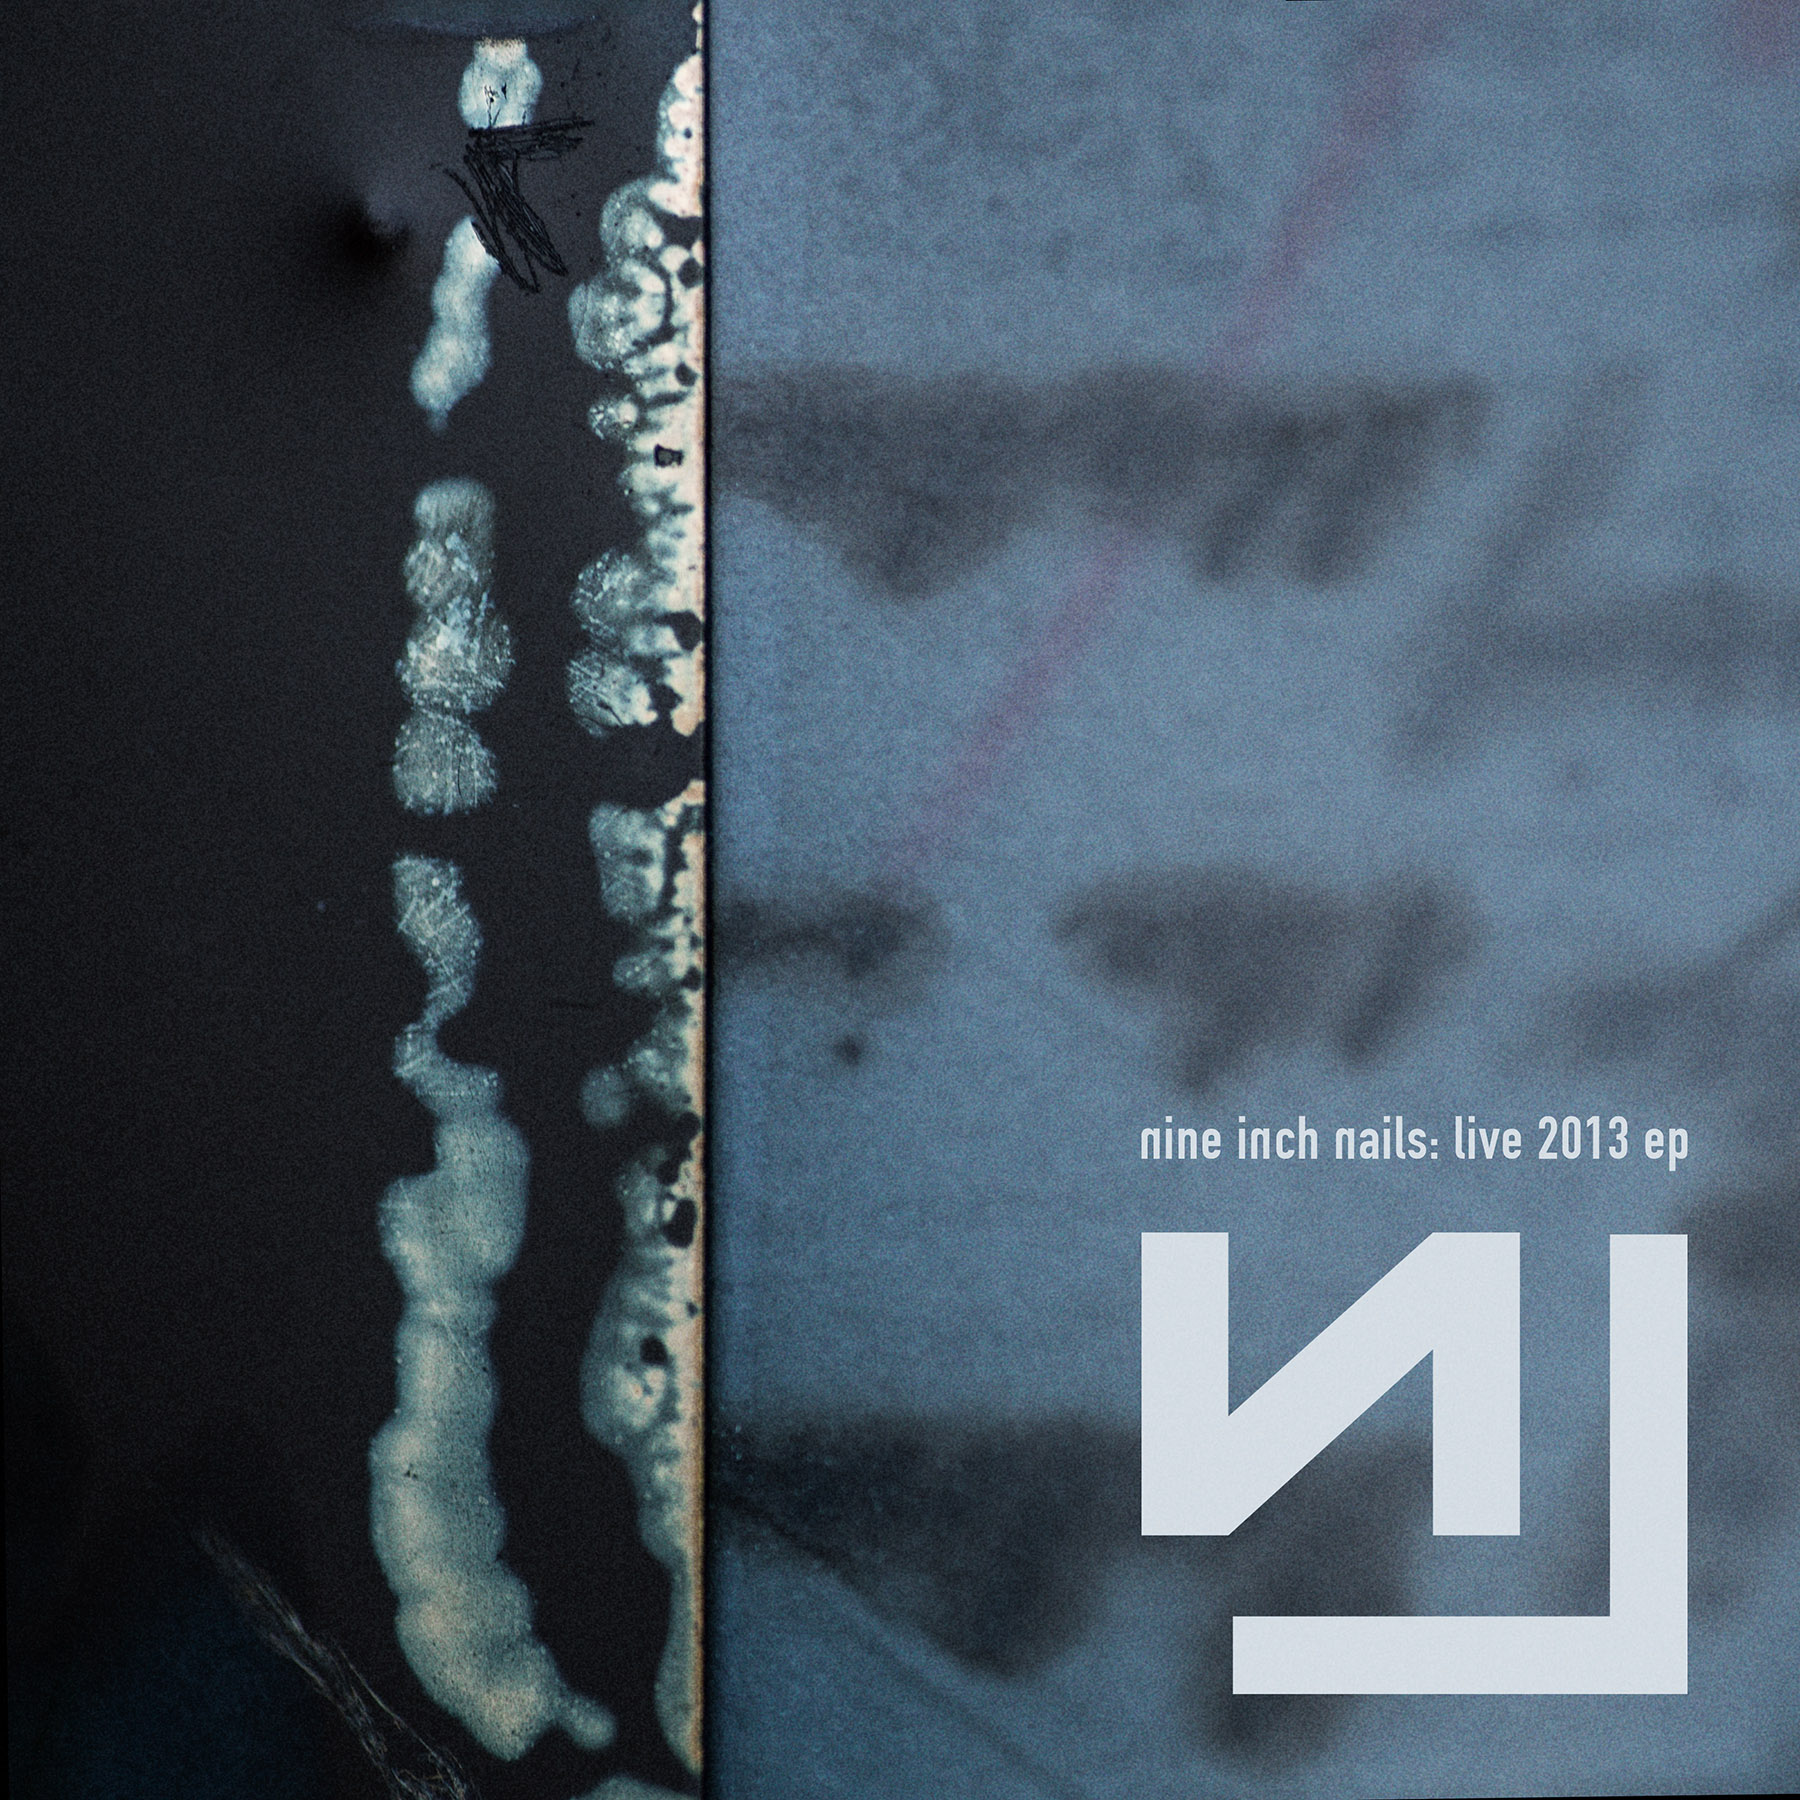 Nine Inch Nails Release Live EP | Under the Radar Magazine